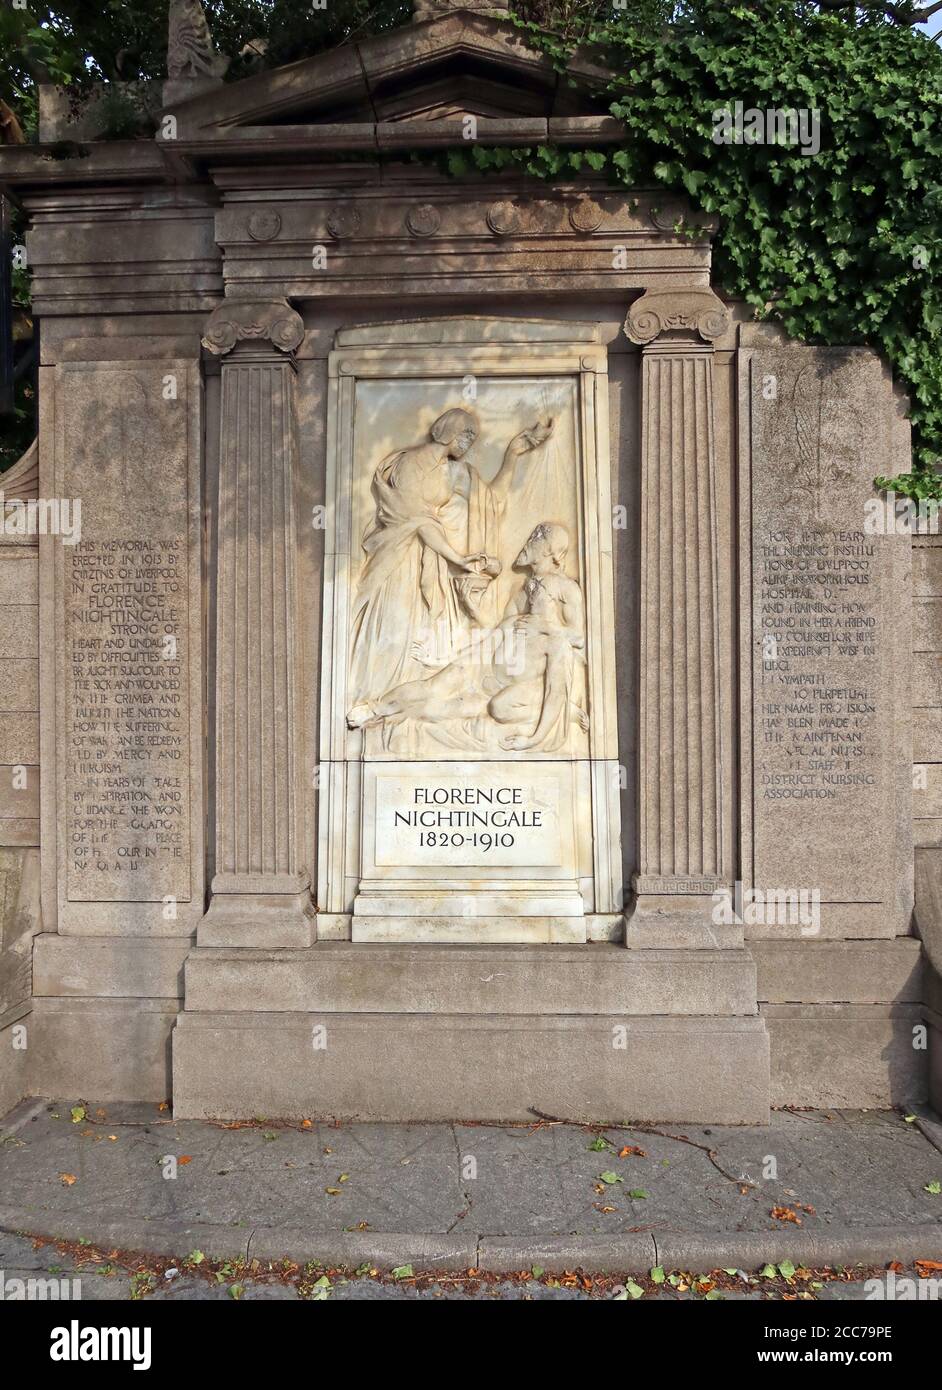 Florence Nightingale Memorial Liverpool, Upper Parliament Street, Merseyside, England, UK - 1820-1910 Stock Photo